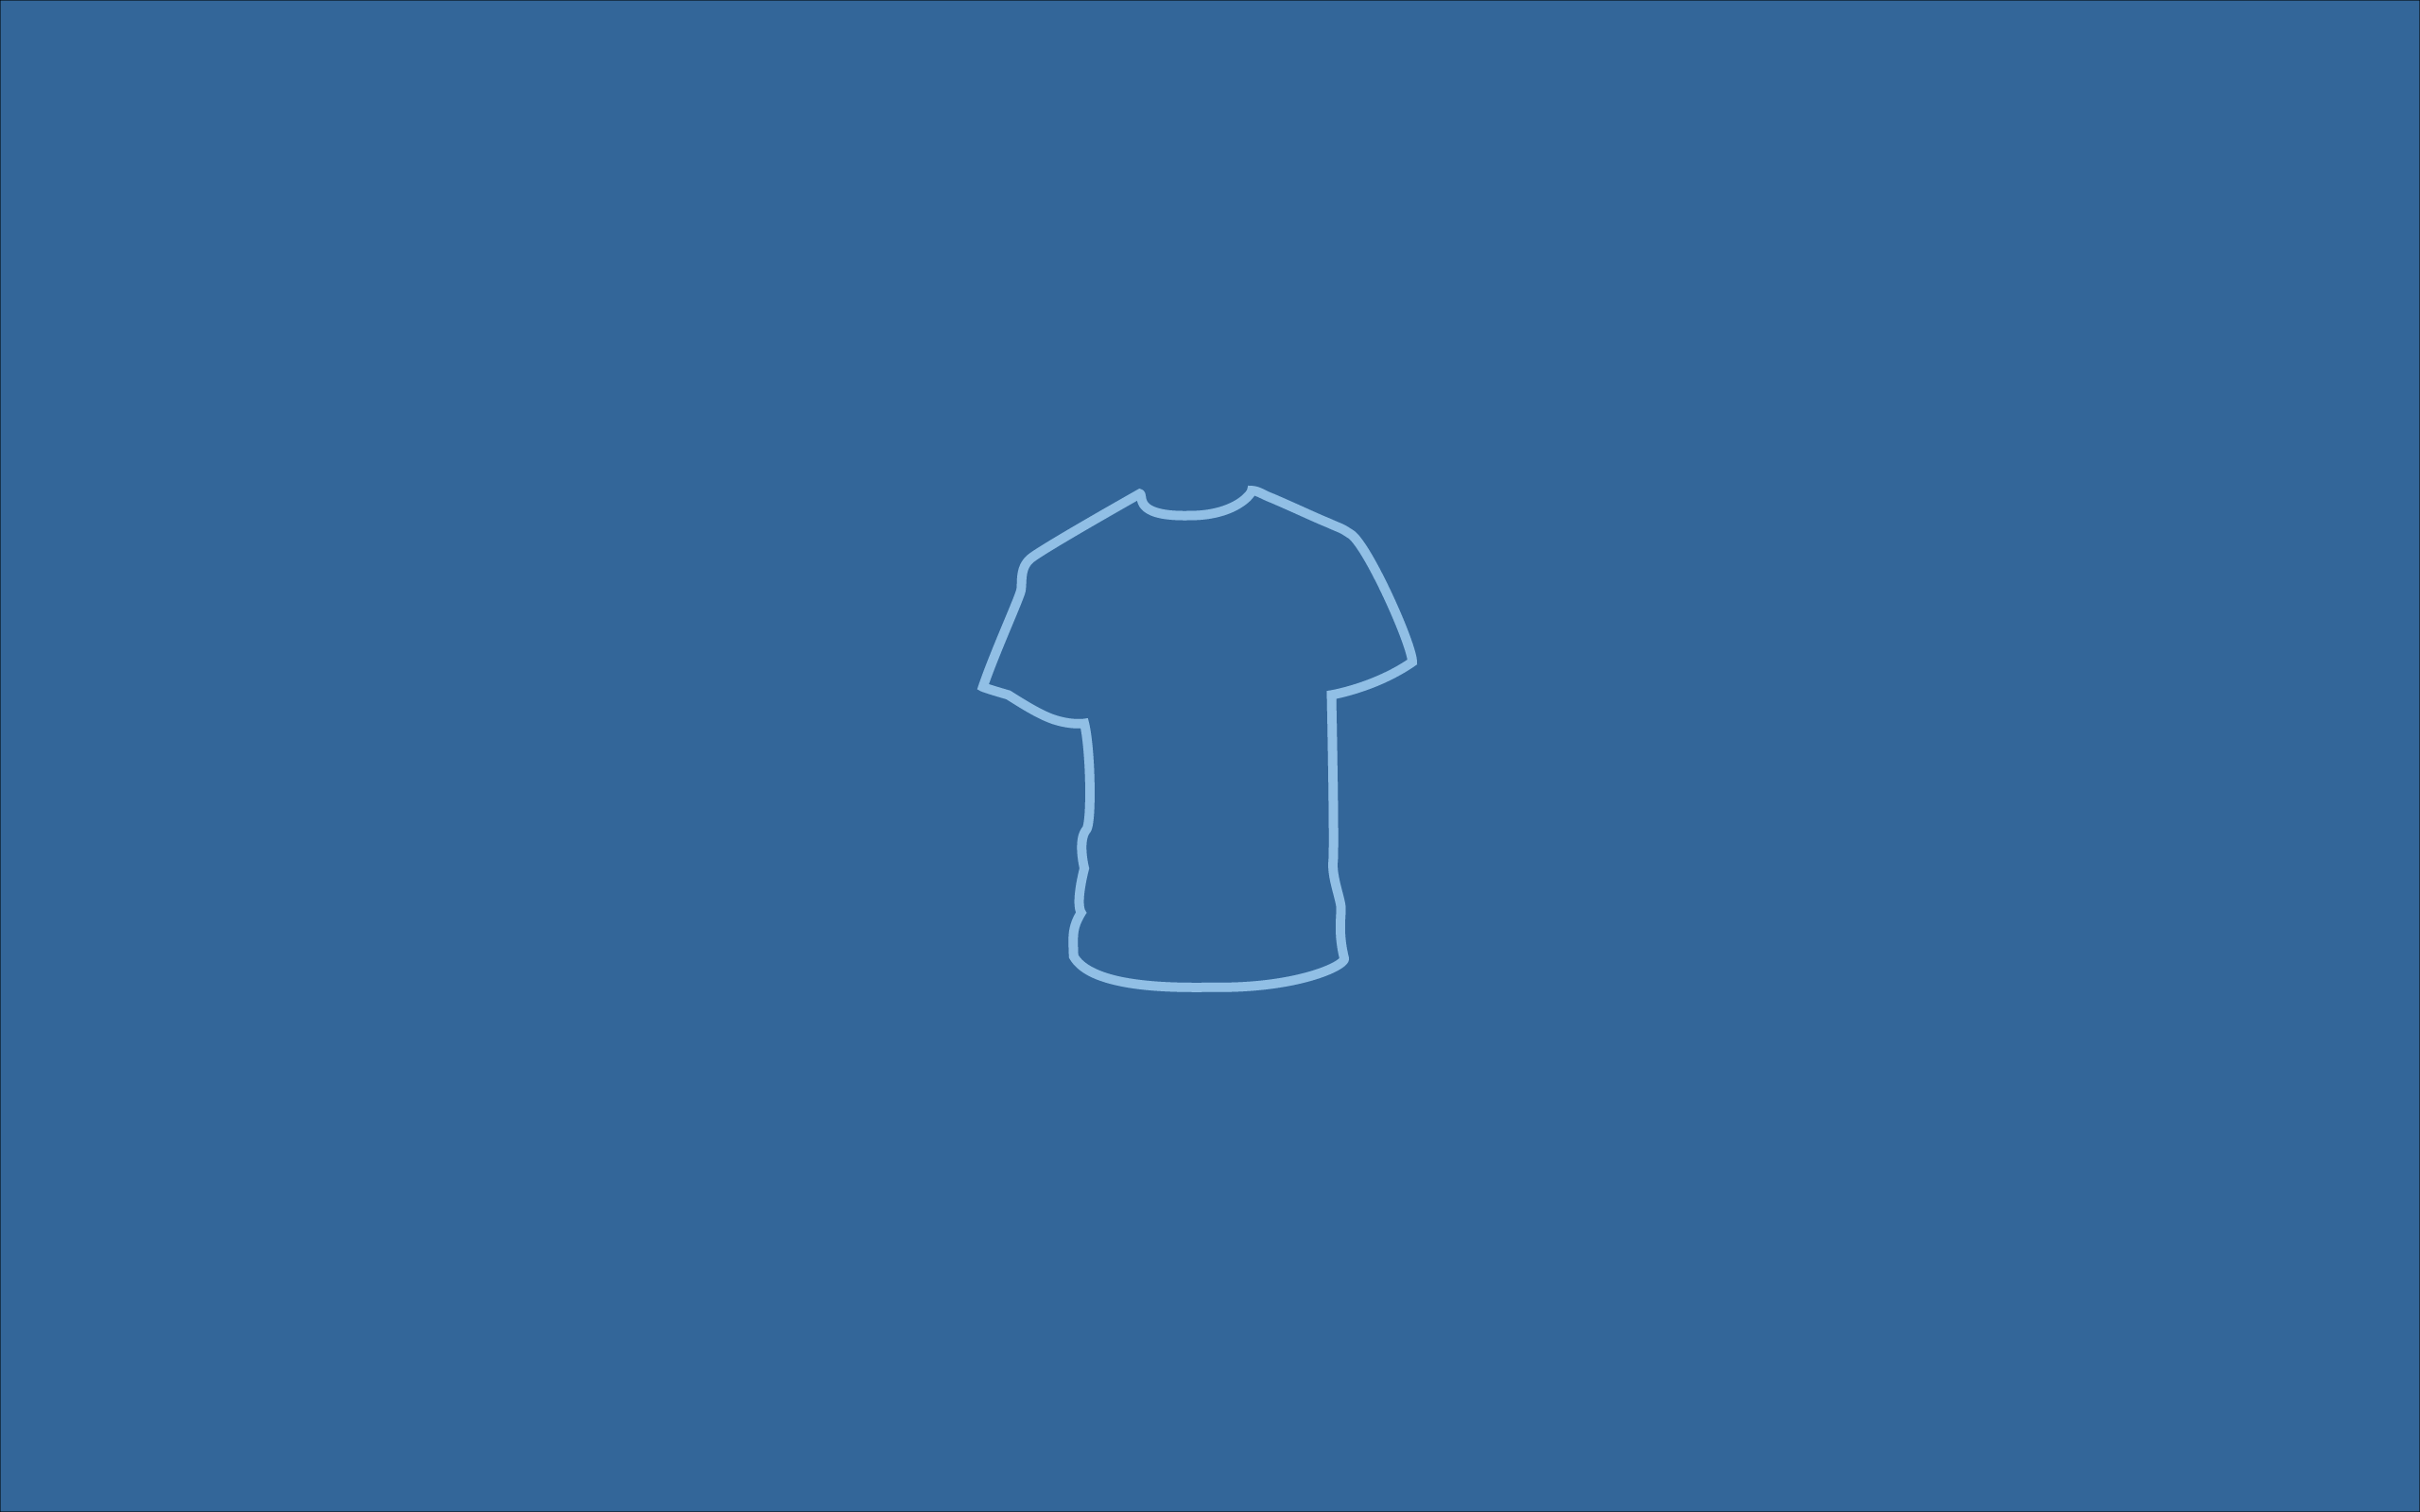 General 2560x1600 minimalism T-shirt simple background blue background clothing